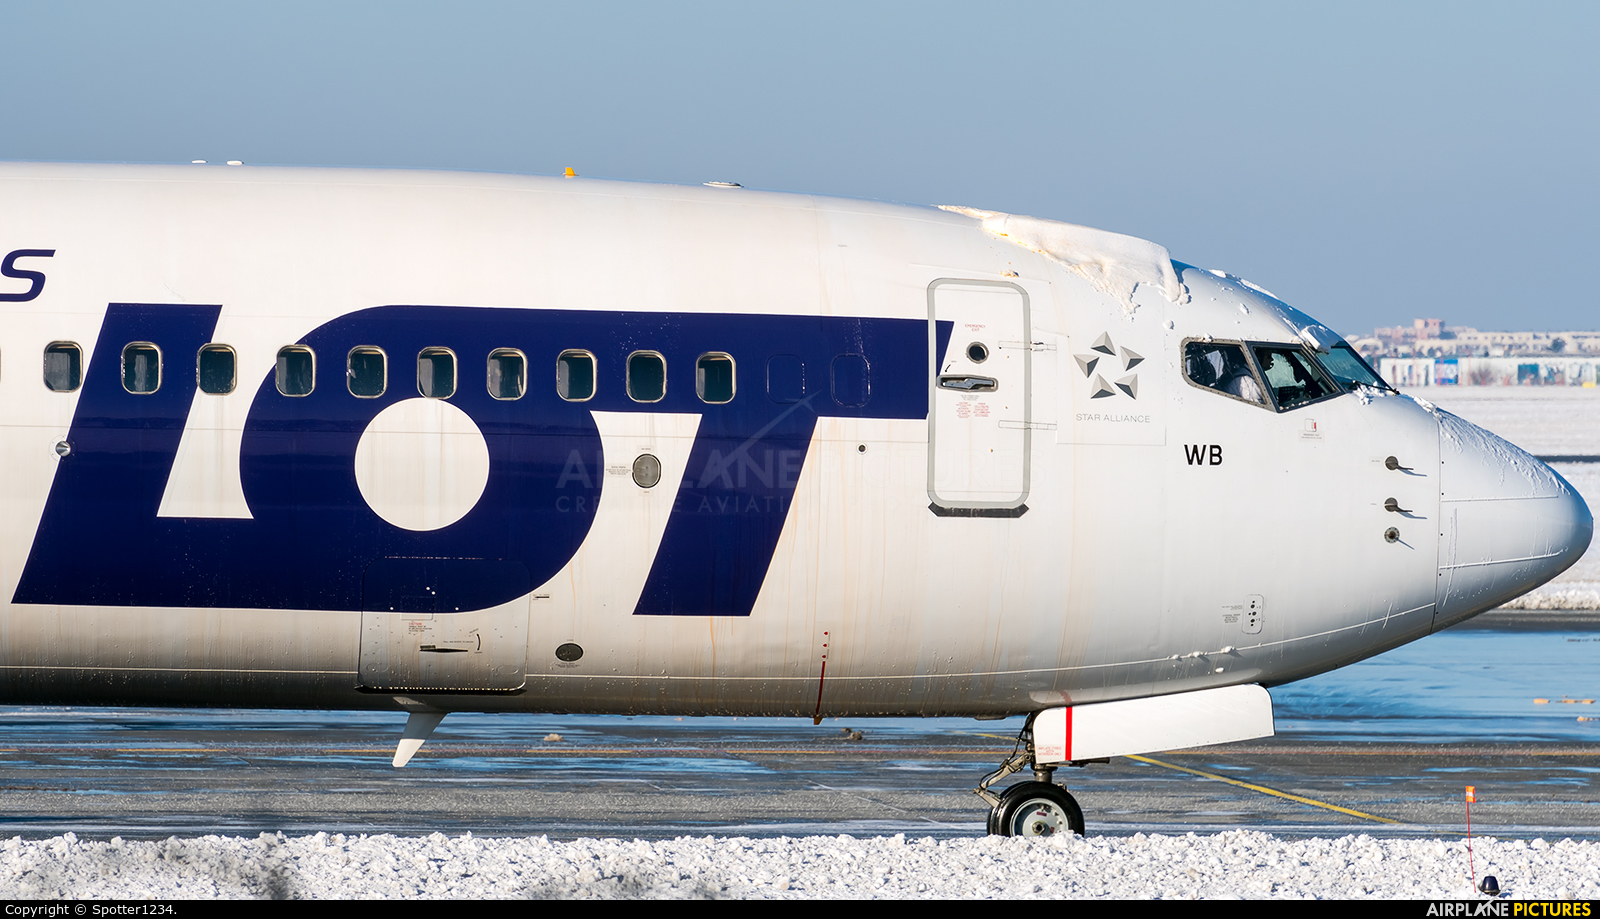 LOT - Polish Airlines SP-LWB aircraft at Warsaw - Frederic Chopin